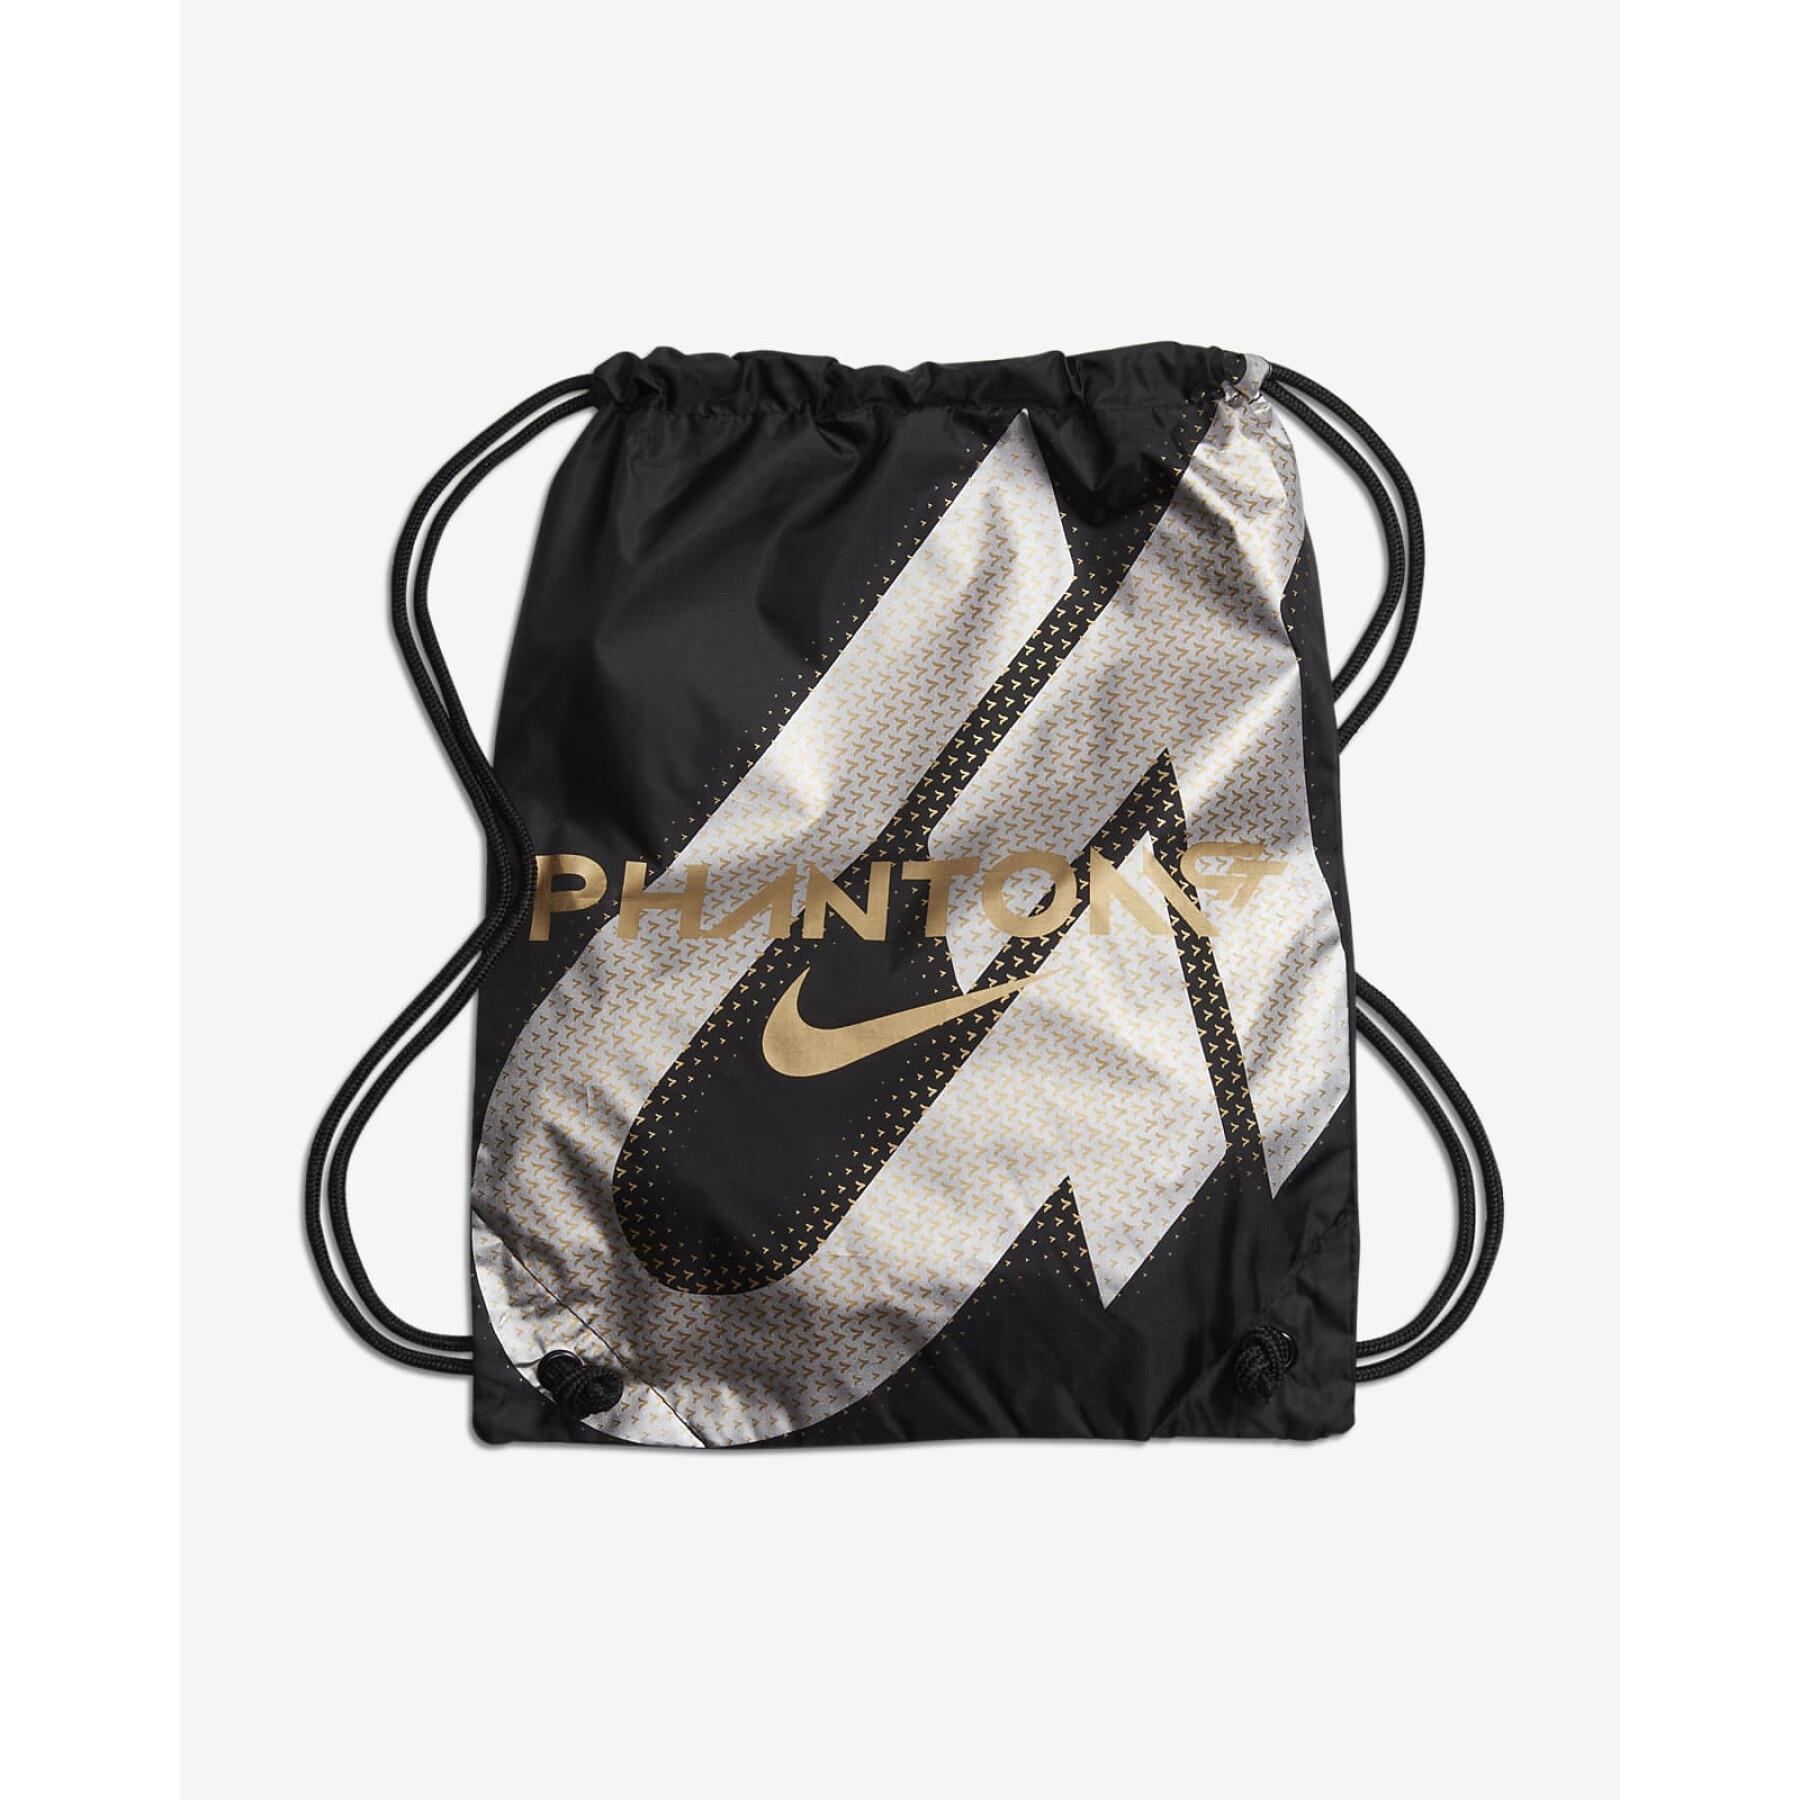 Fotbollsskor Nike Phantom GT2 Dynamic Fit Élite AG-Pro - Shadow pack